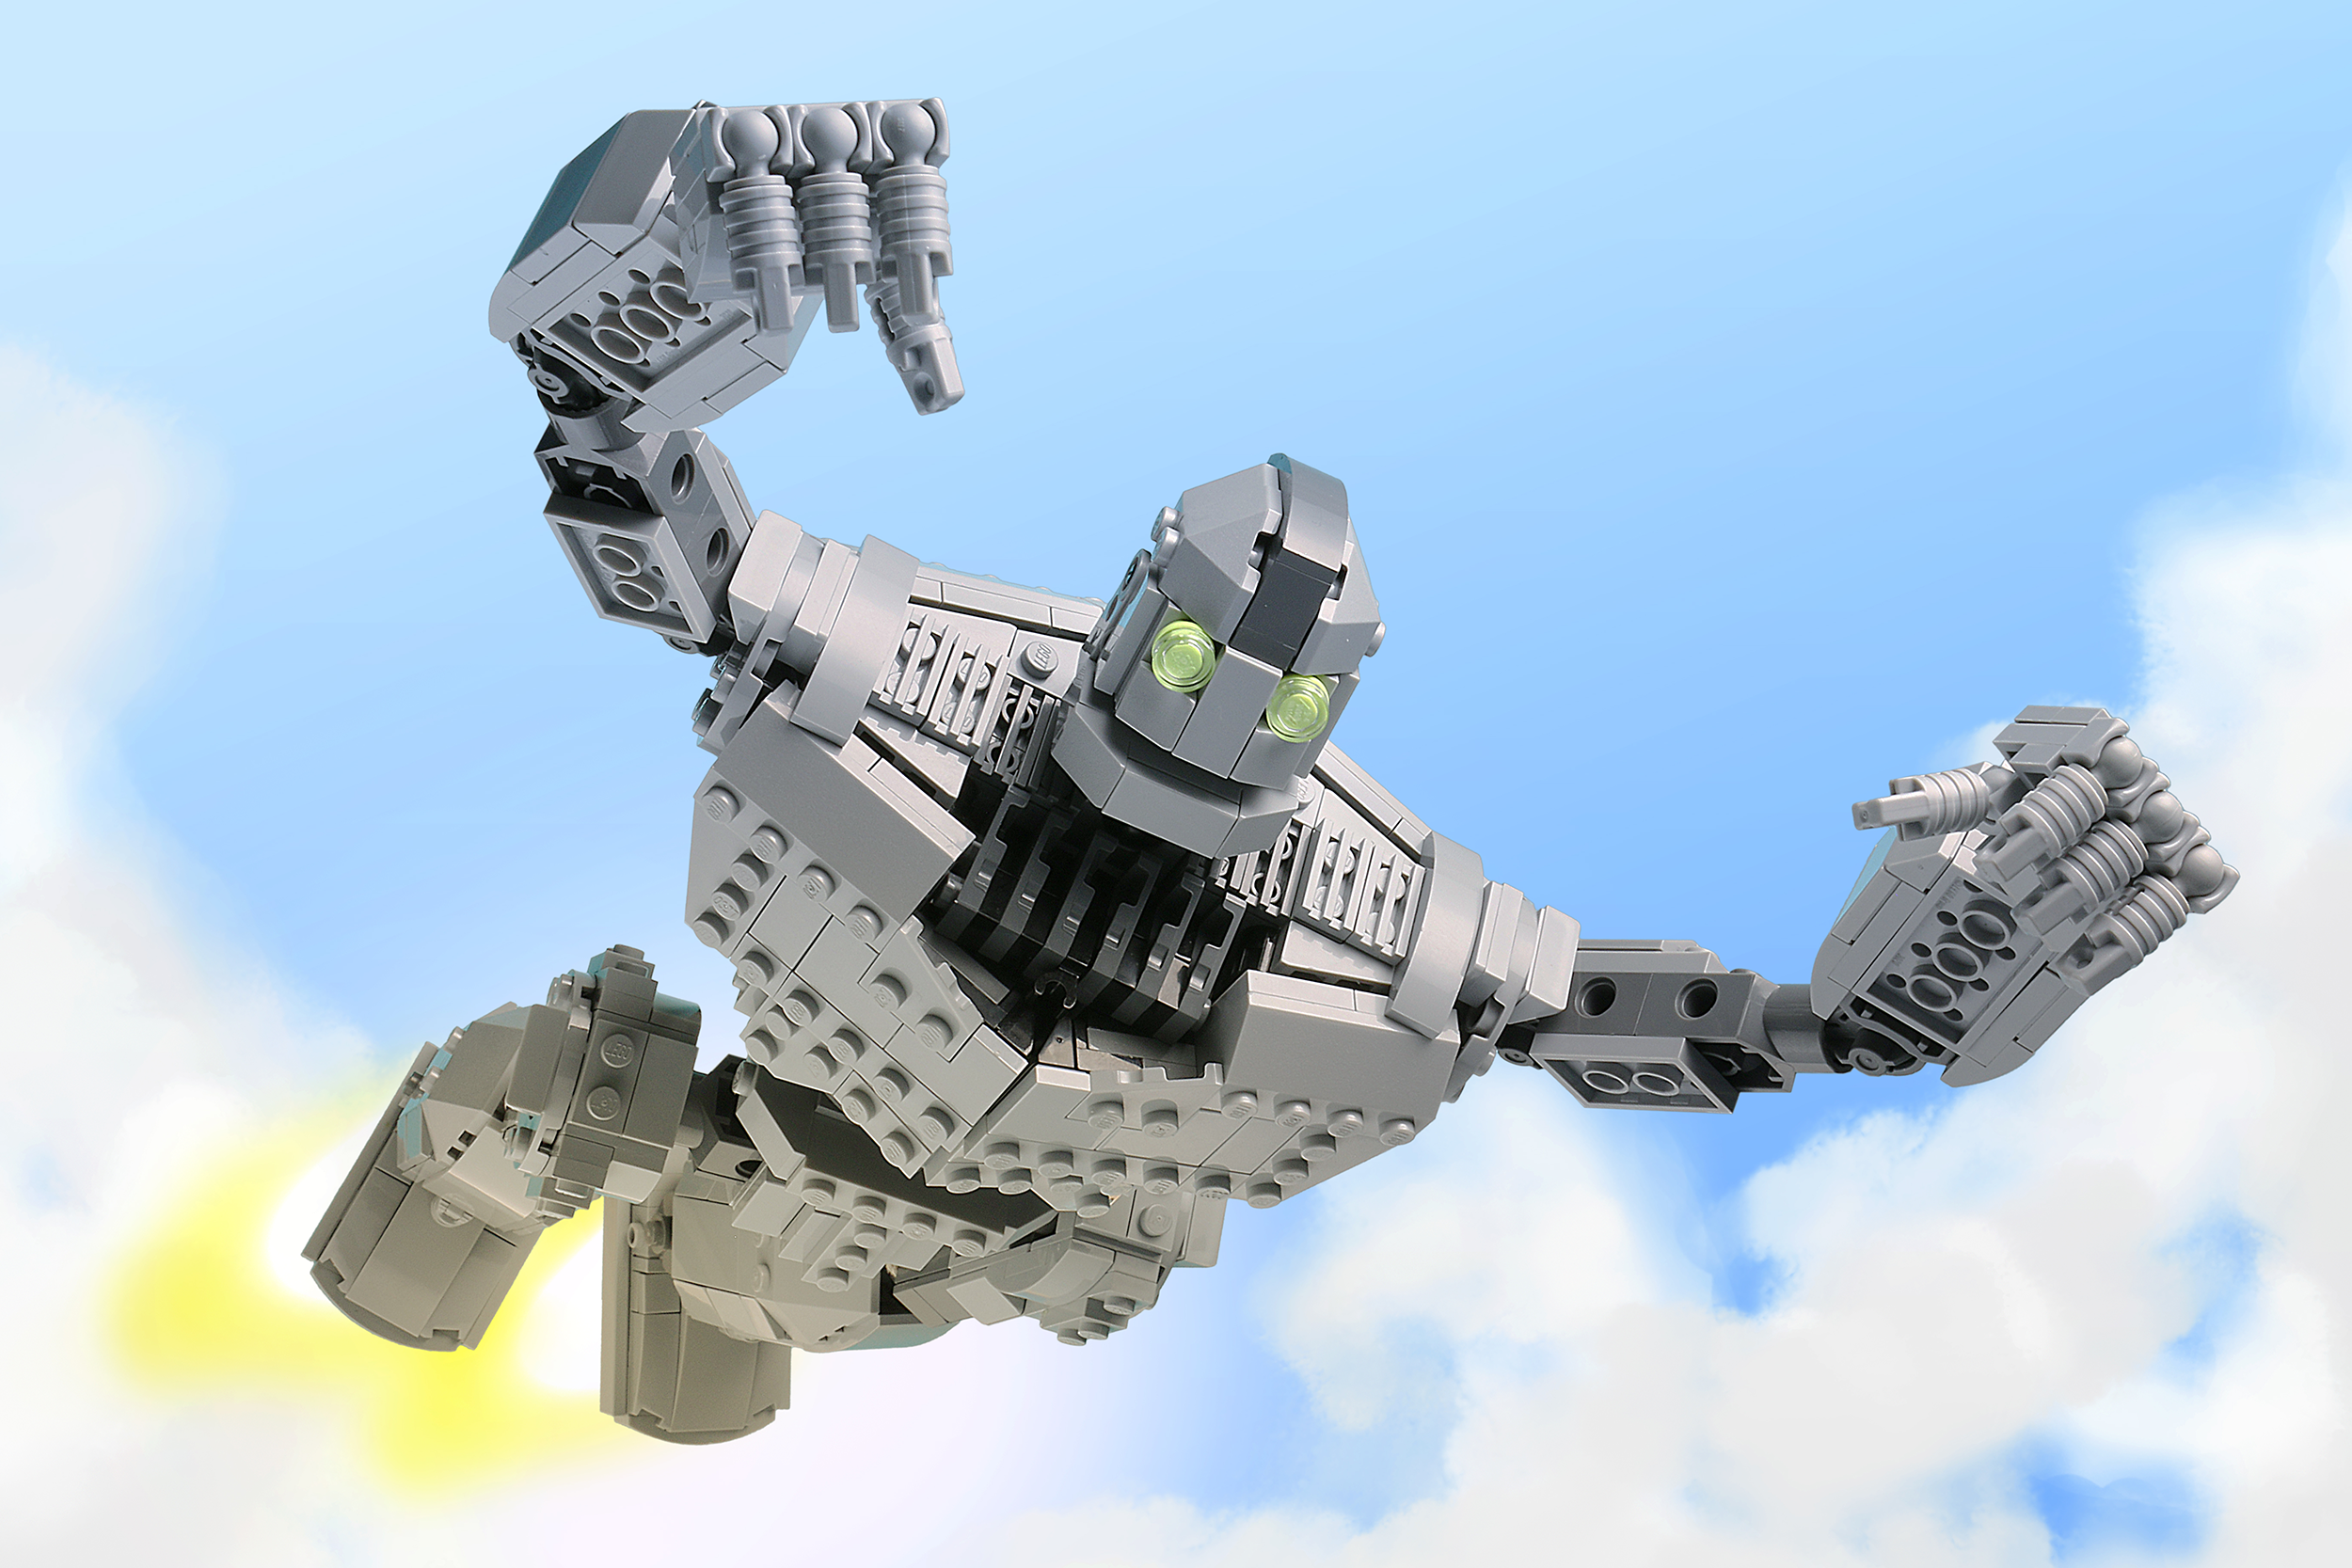 Iron Giant - Custom MOC made from LEGO bricks